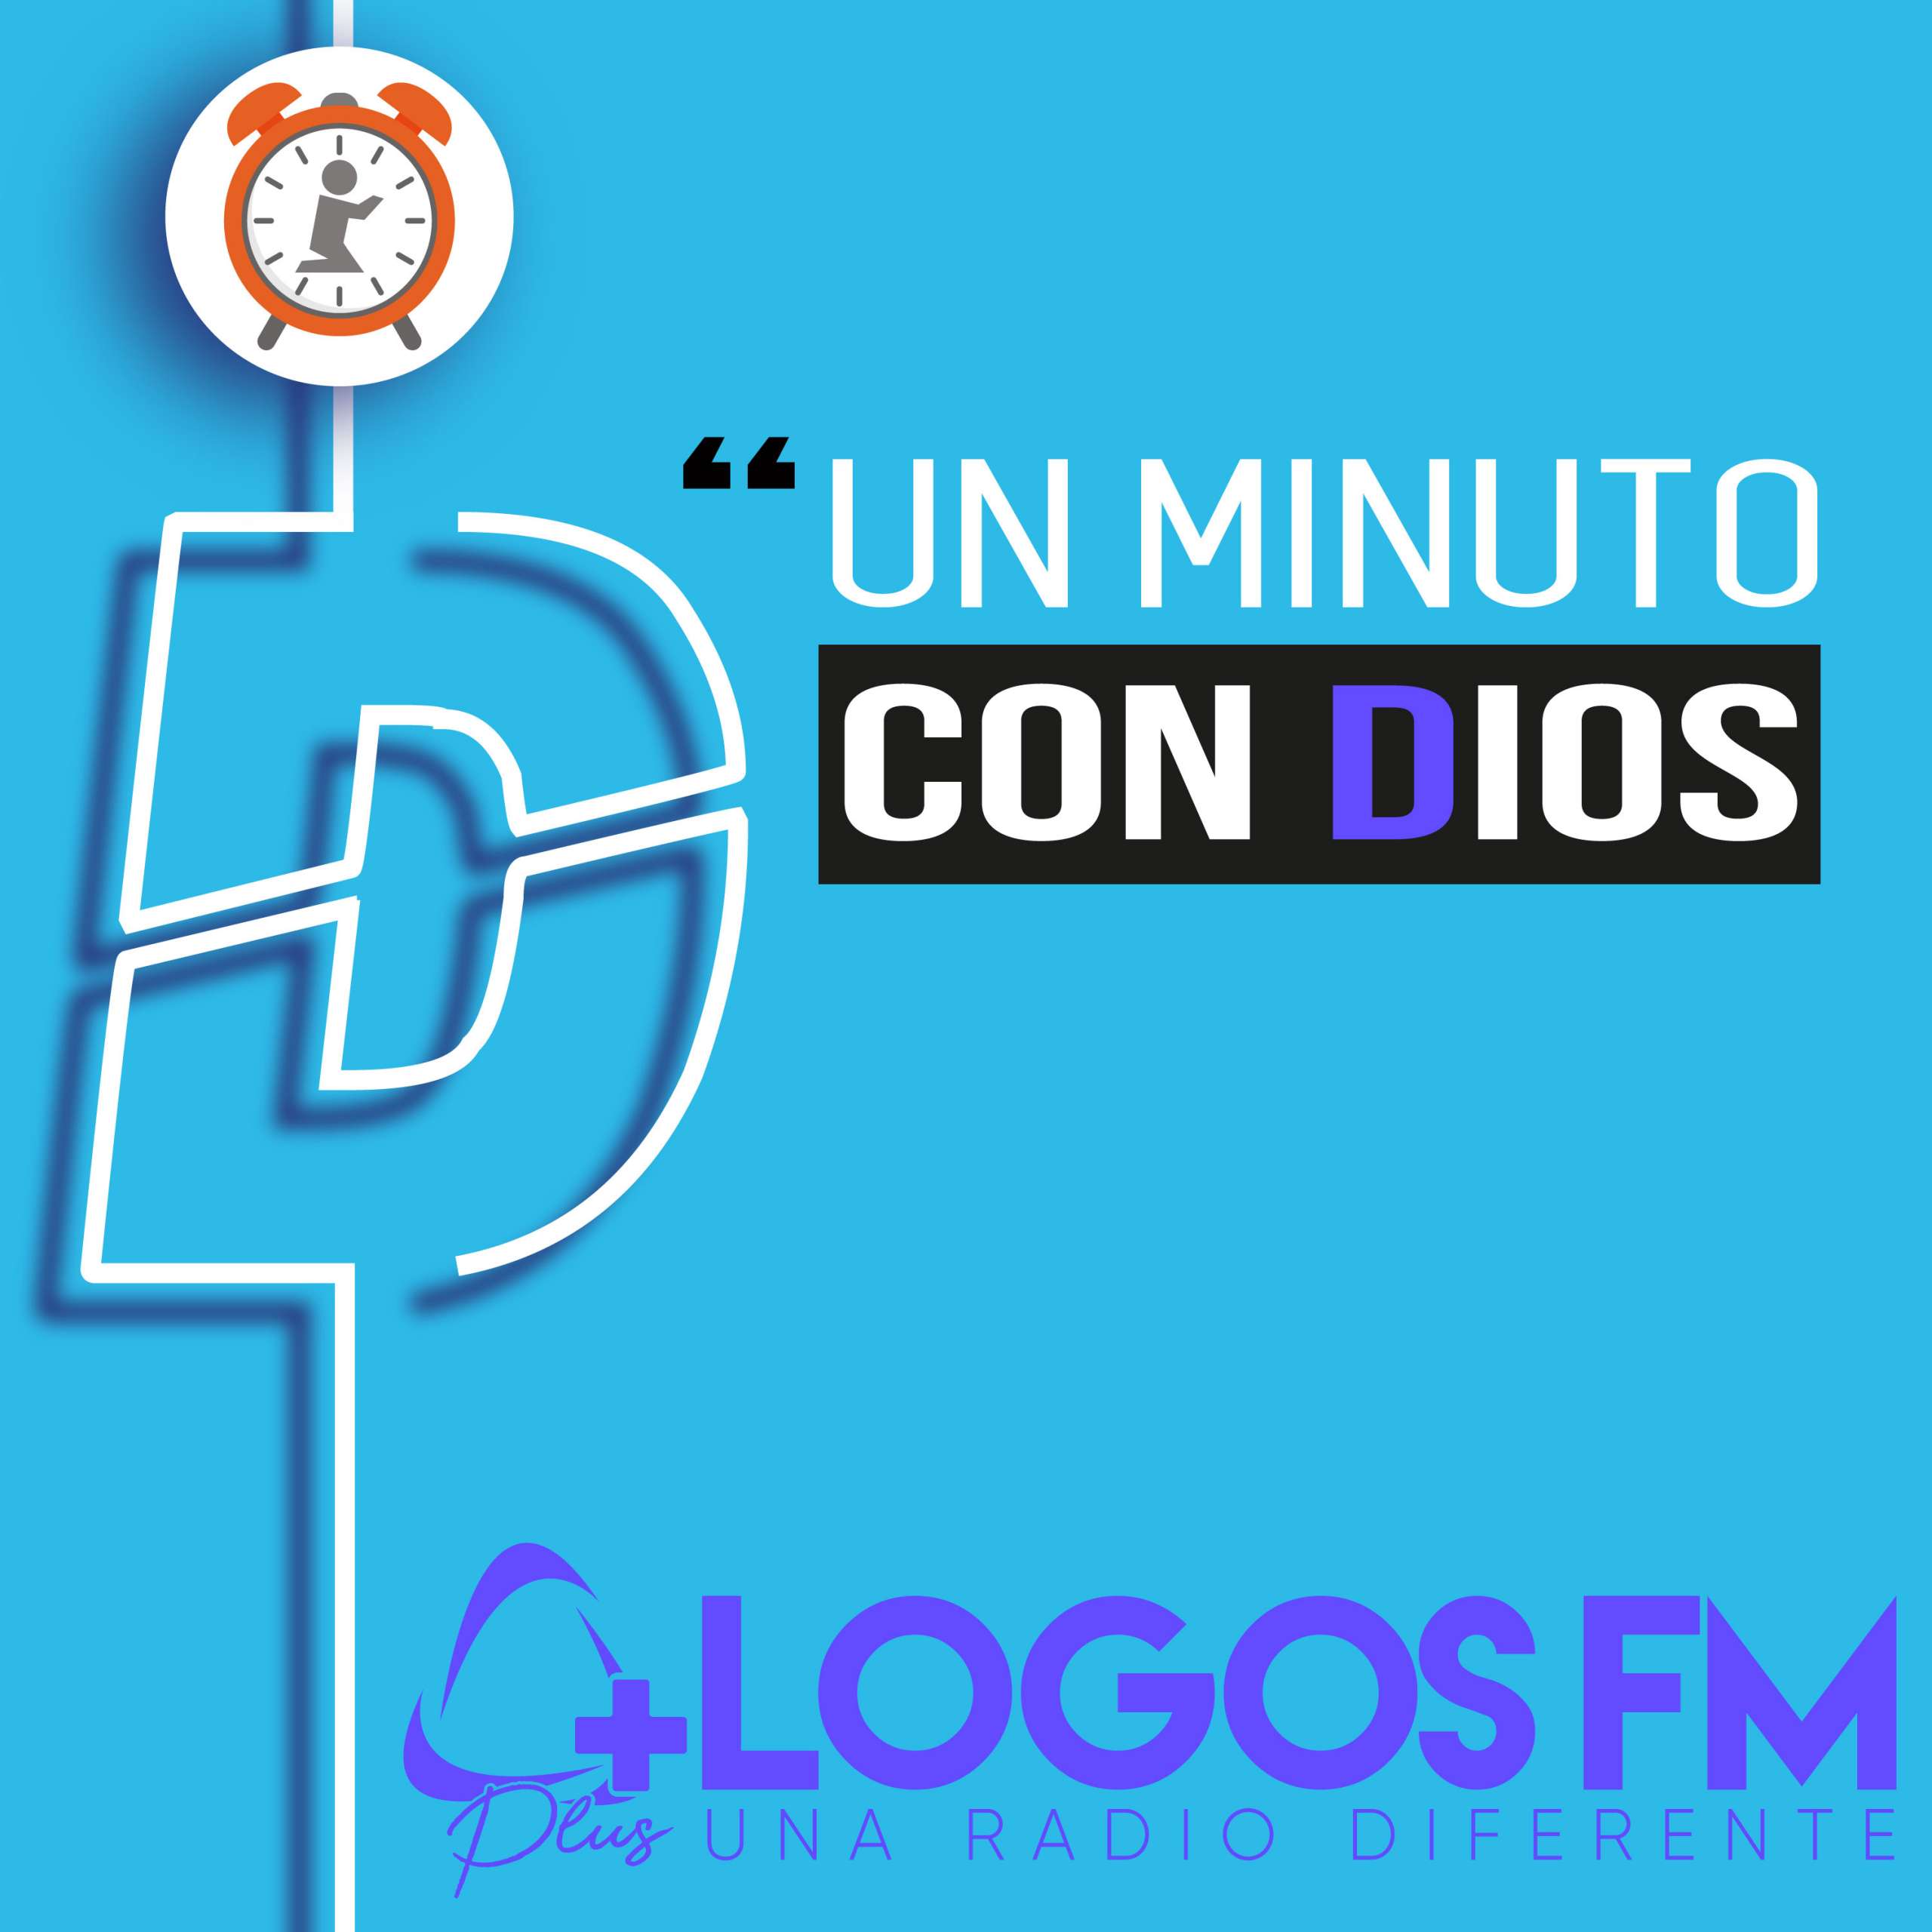 Un minuto con Dios - Episodio 365 - Loida Vargas